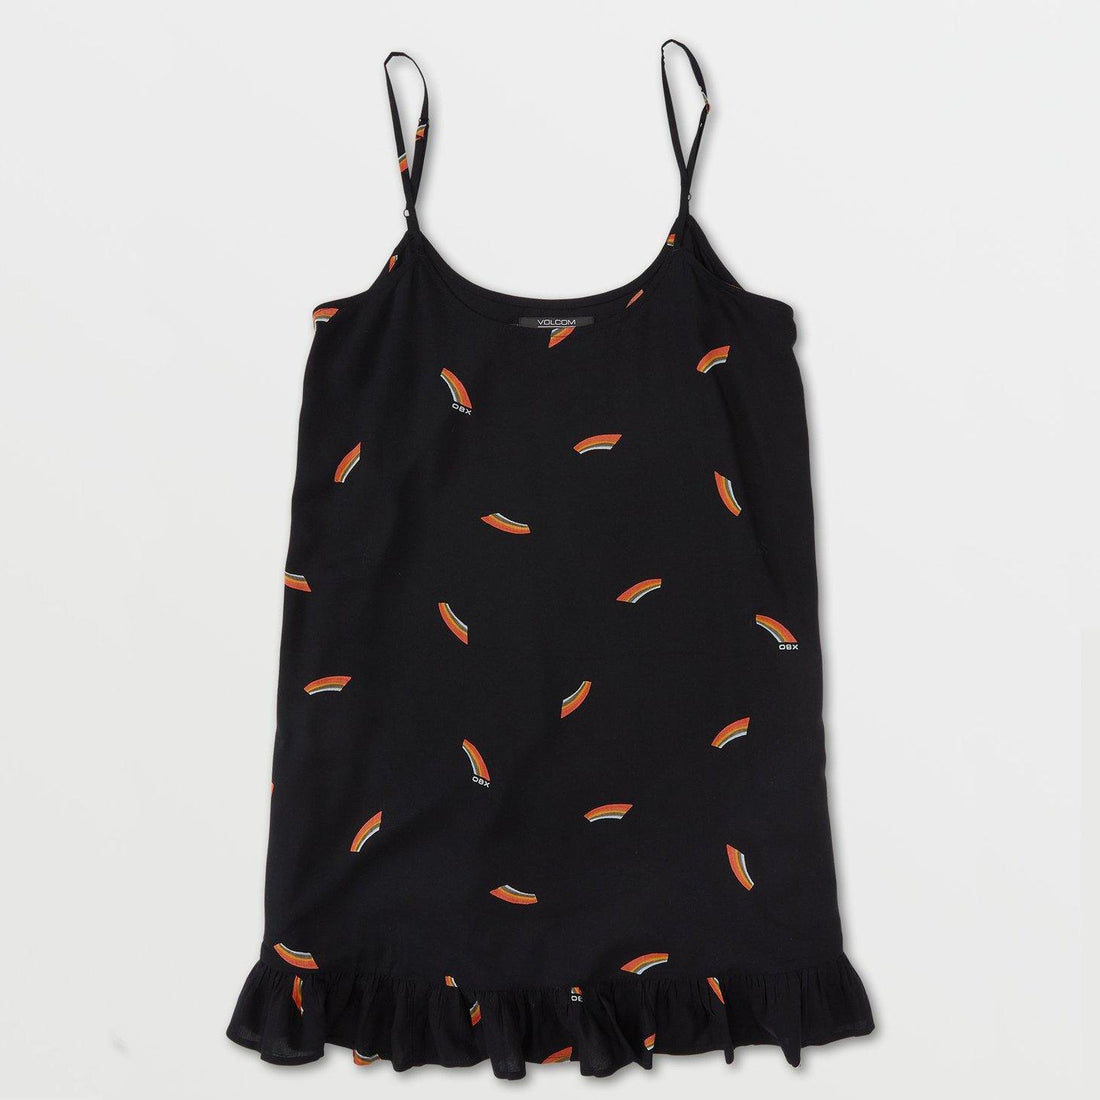 OBX Paradise Dress - Kitty Hawk Kites Online Store